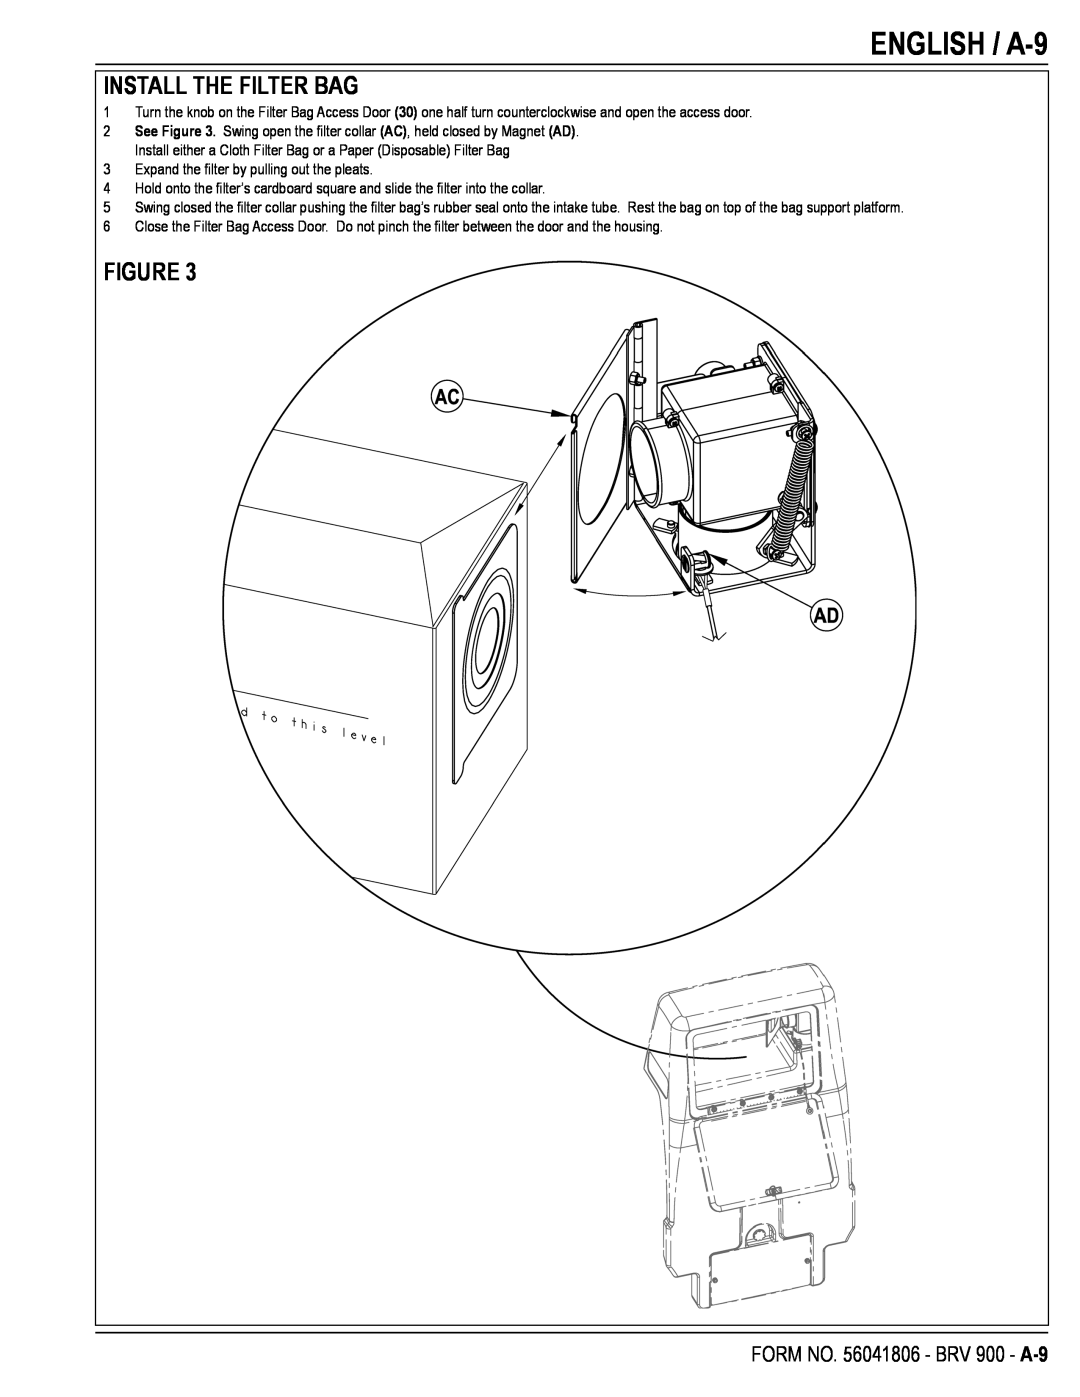 Nilfisk-Advance America manual ENGLISH / A-9, Install The Filter Bag, FORM NO. 56041806 - BRV 900 - A-9, Figure 